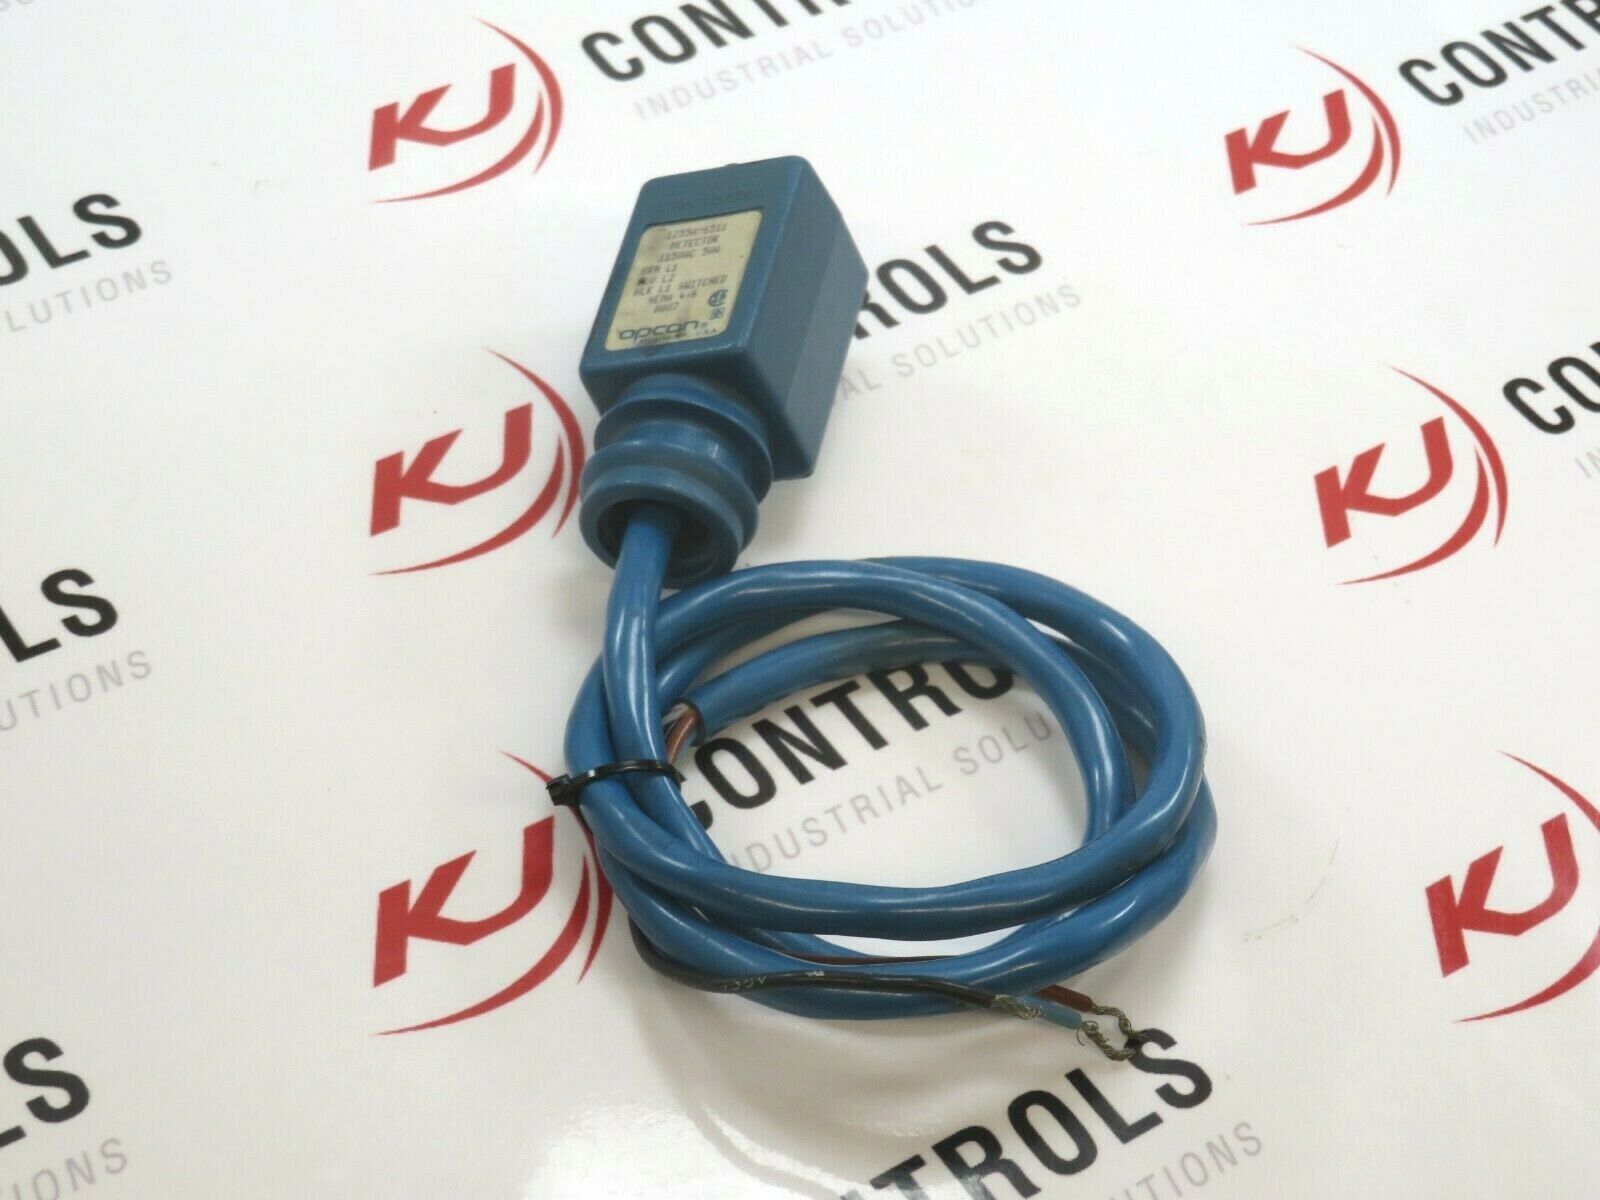 Eaton Cutler-Hammer 1255A-6511 Thru-Beam Photoelectric Sensor 115VAC 6FT Cable